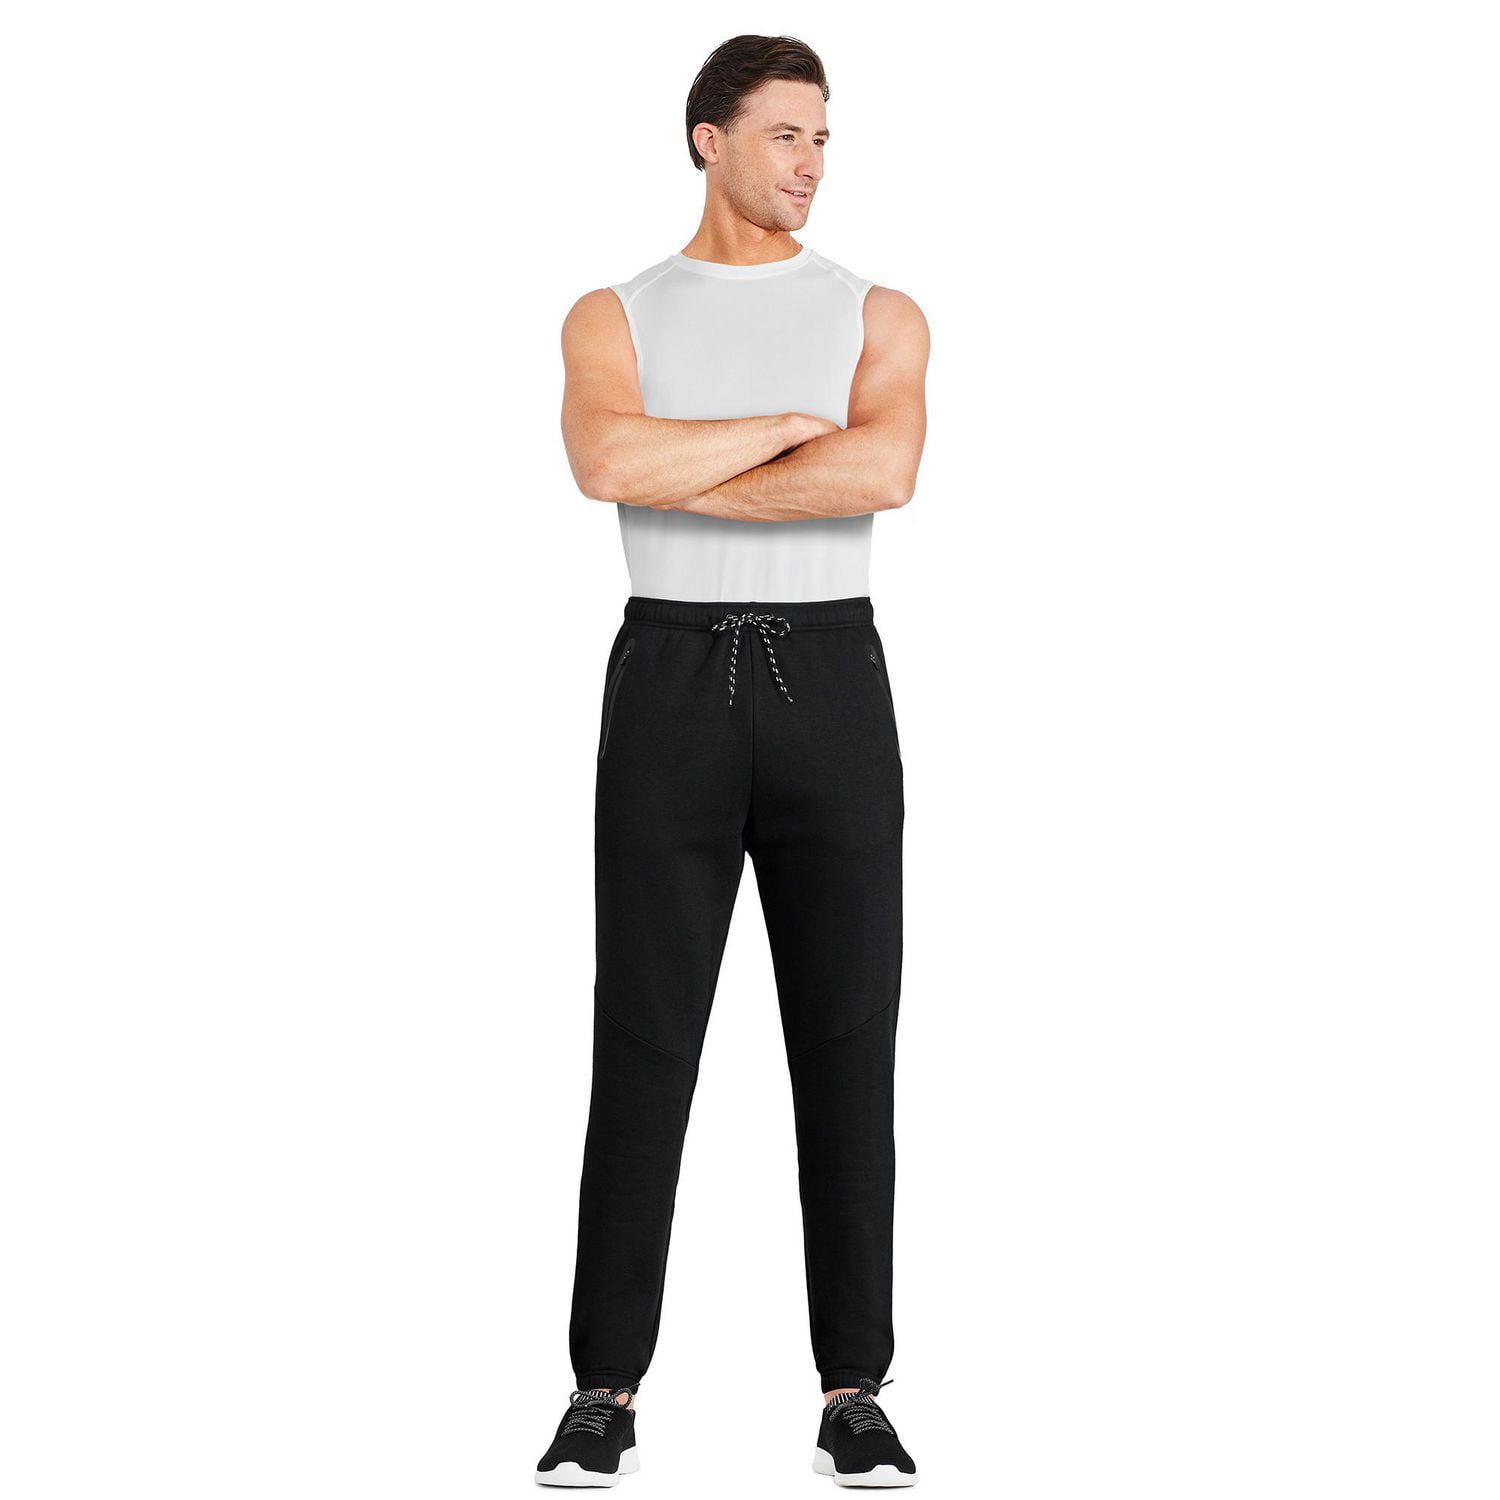 Tahari Mens XL Athletic Pants Joggers Tapered Black Brand New